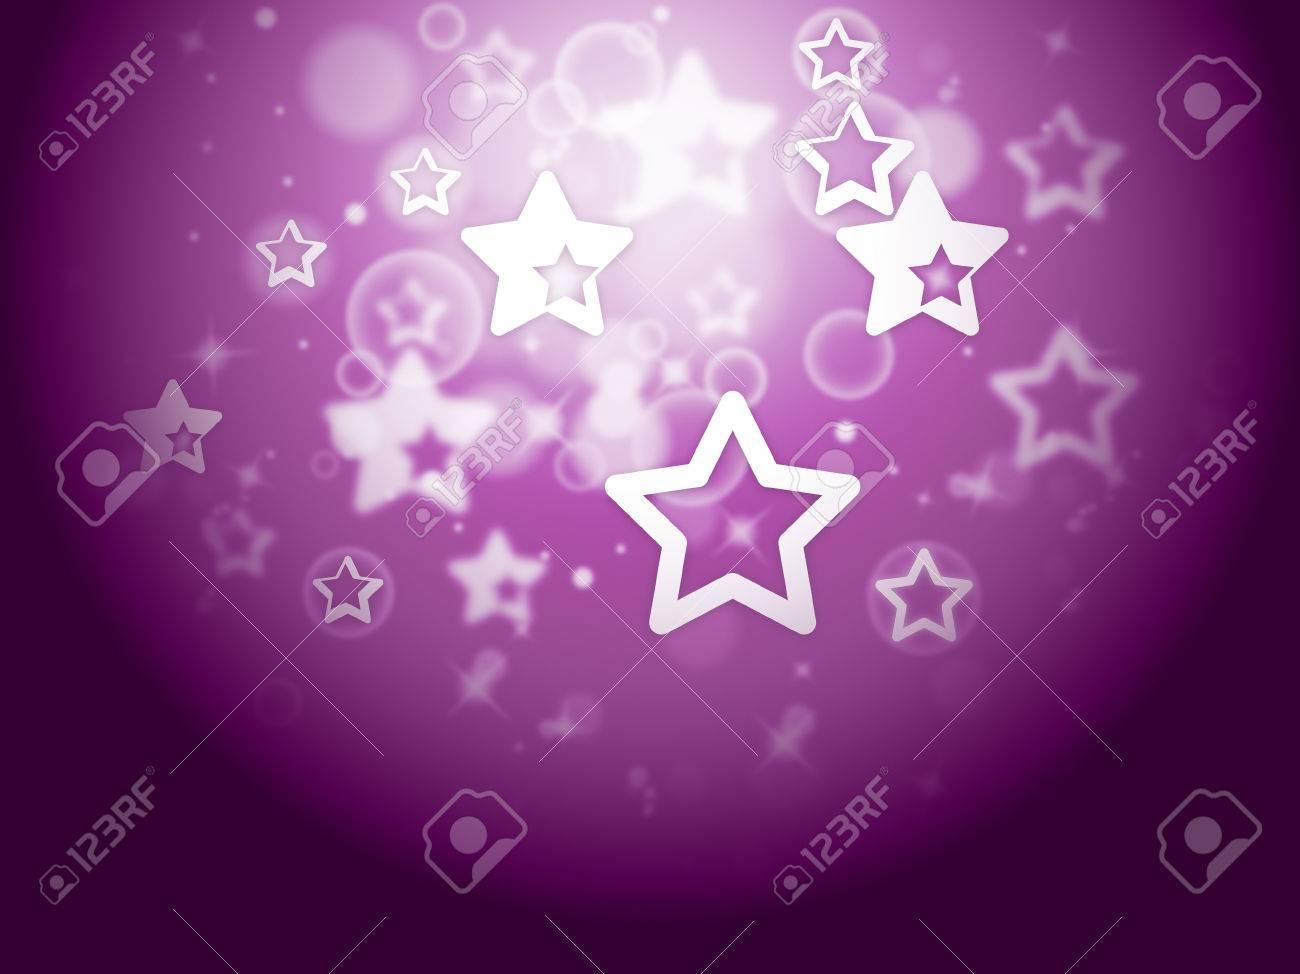 Stars Background Meaning Fantasy Wallpaper Or Sparkling Design